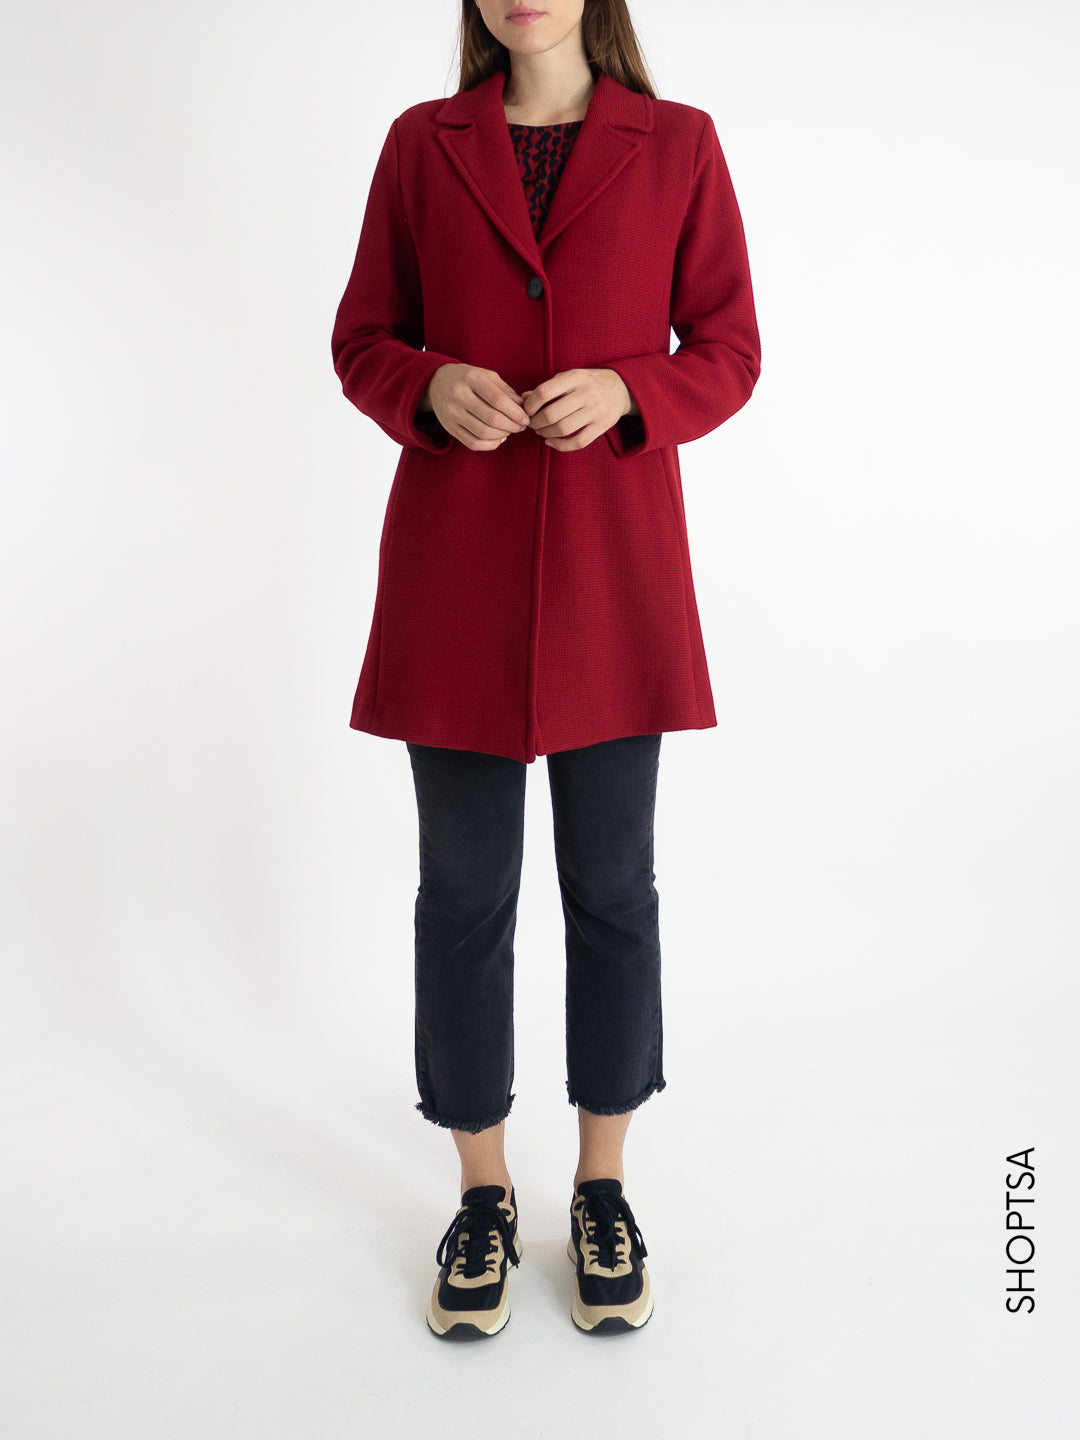 GALANTE red coat - EMME Marella